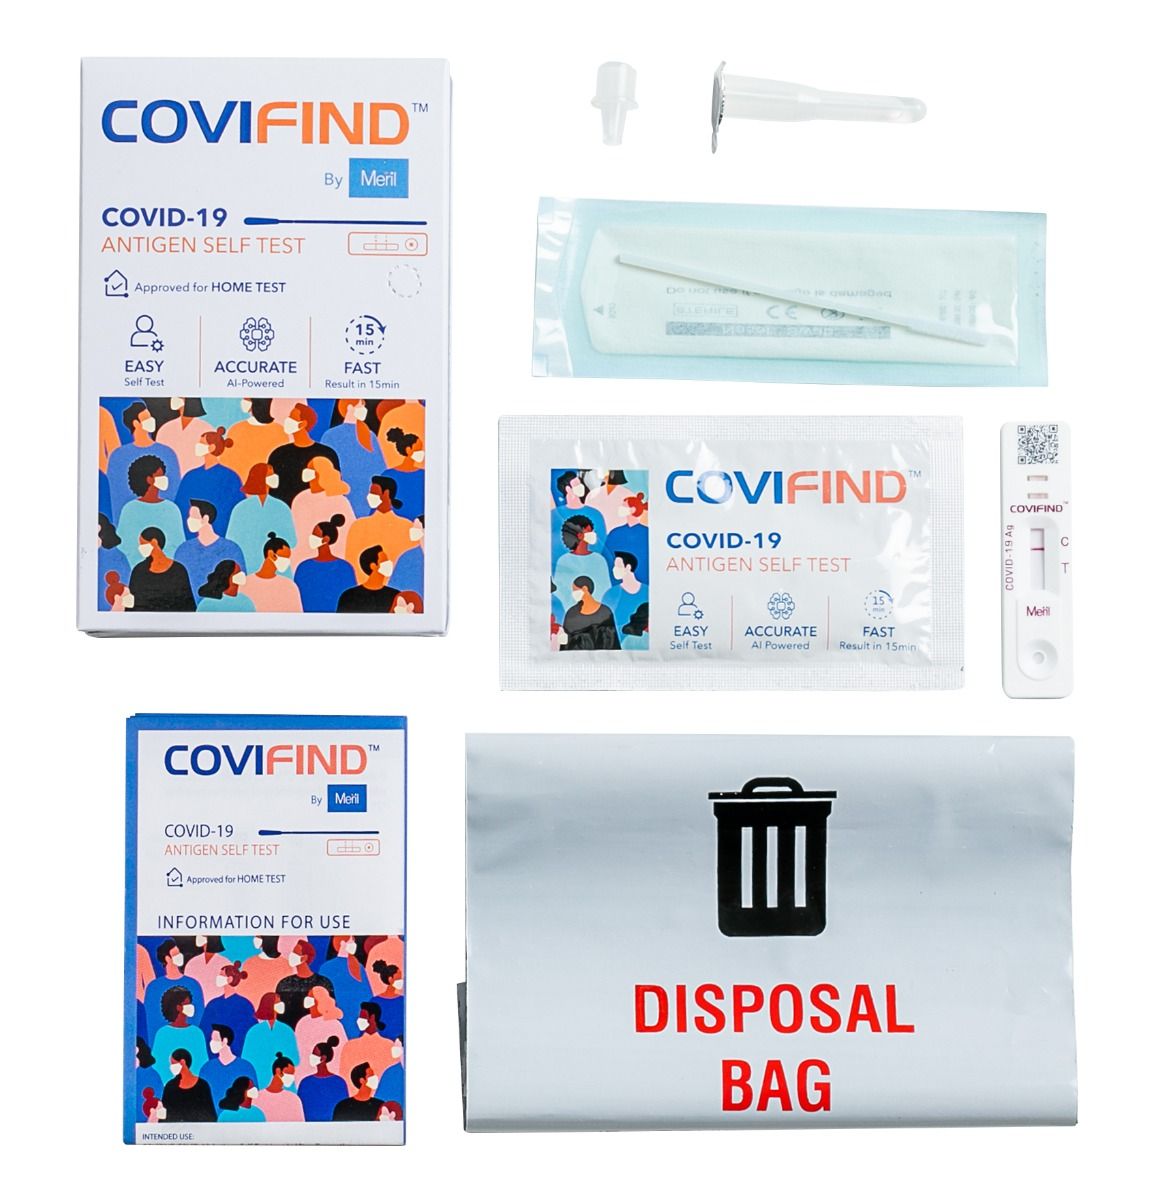 COVIFIND Covid-19 Antigen Self Test Kit, 2 kits, Pack of 2 S